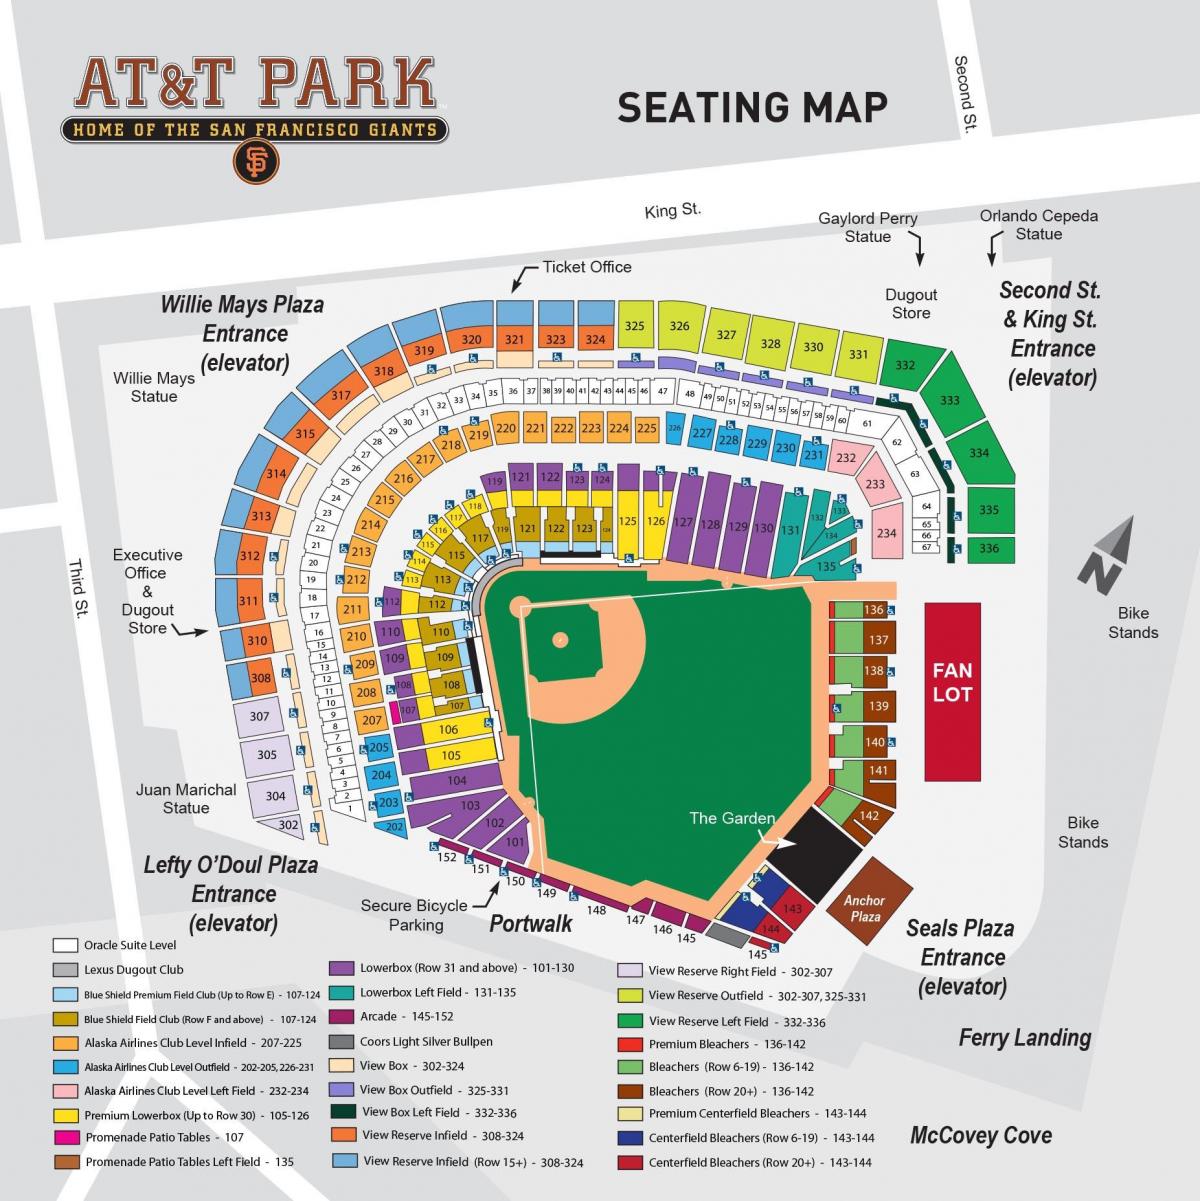 At&t park detaylı koltuk haritası 